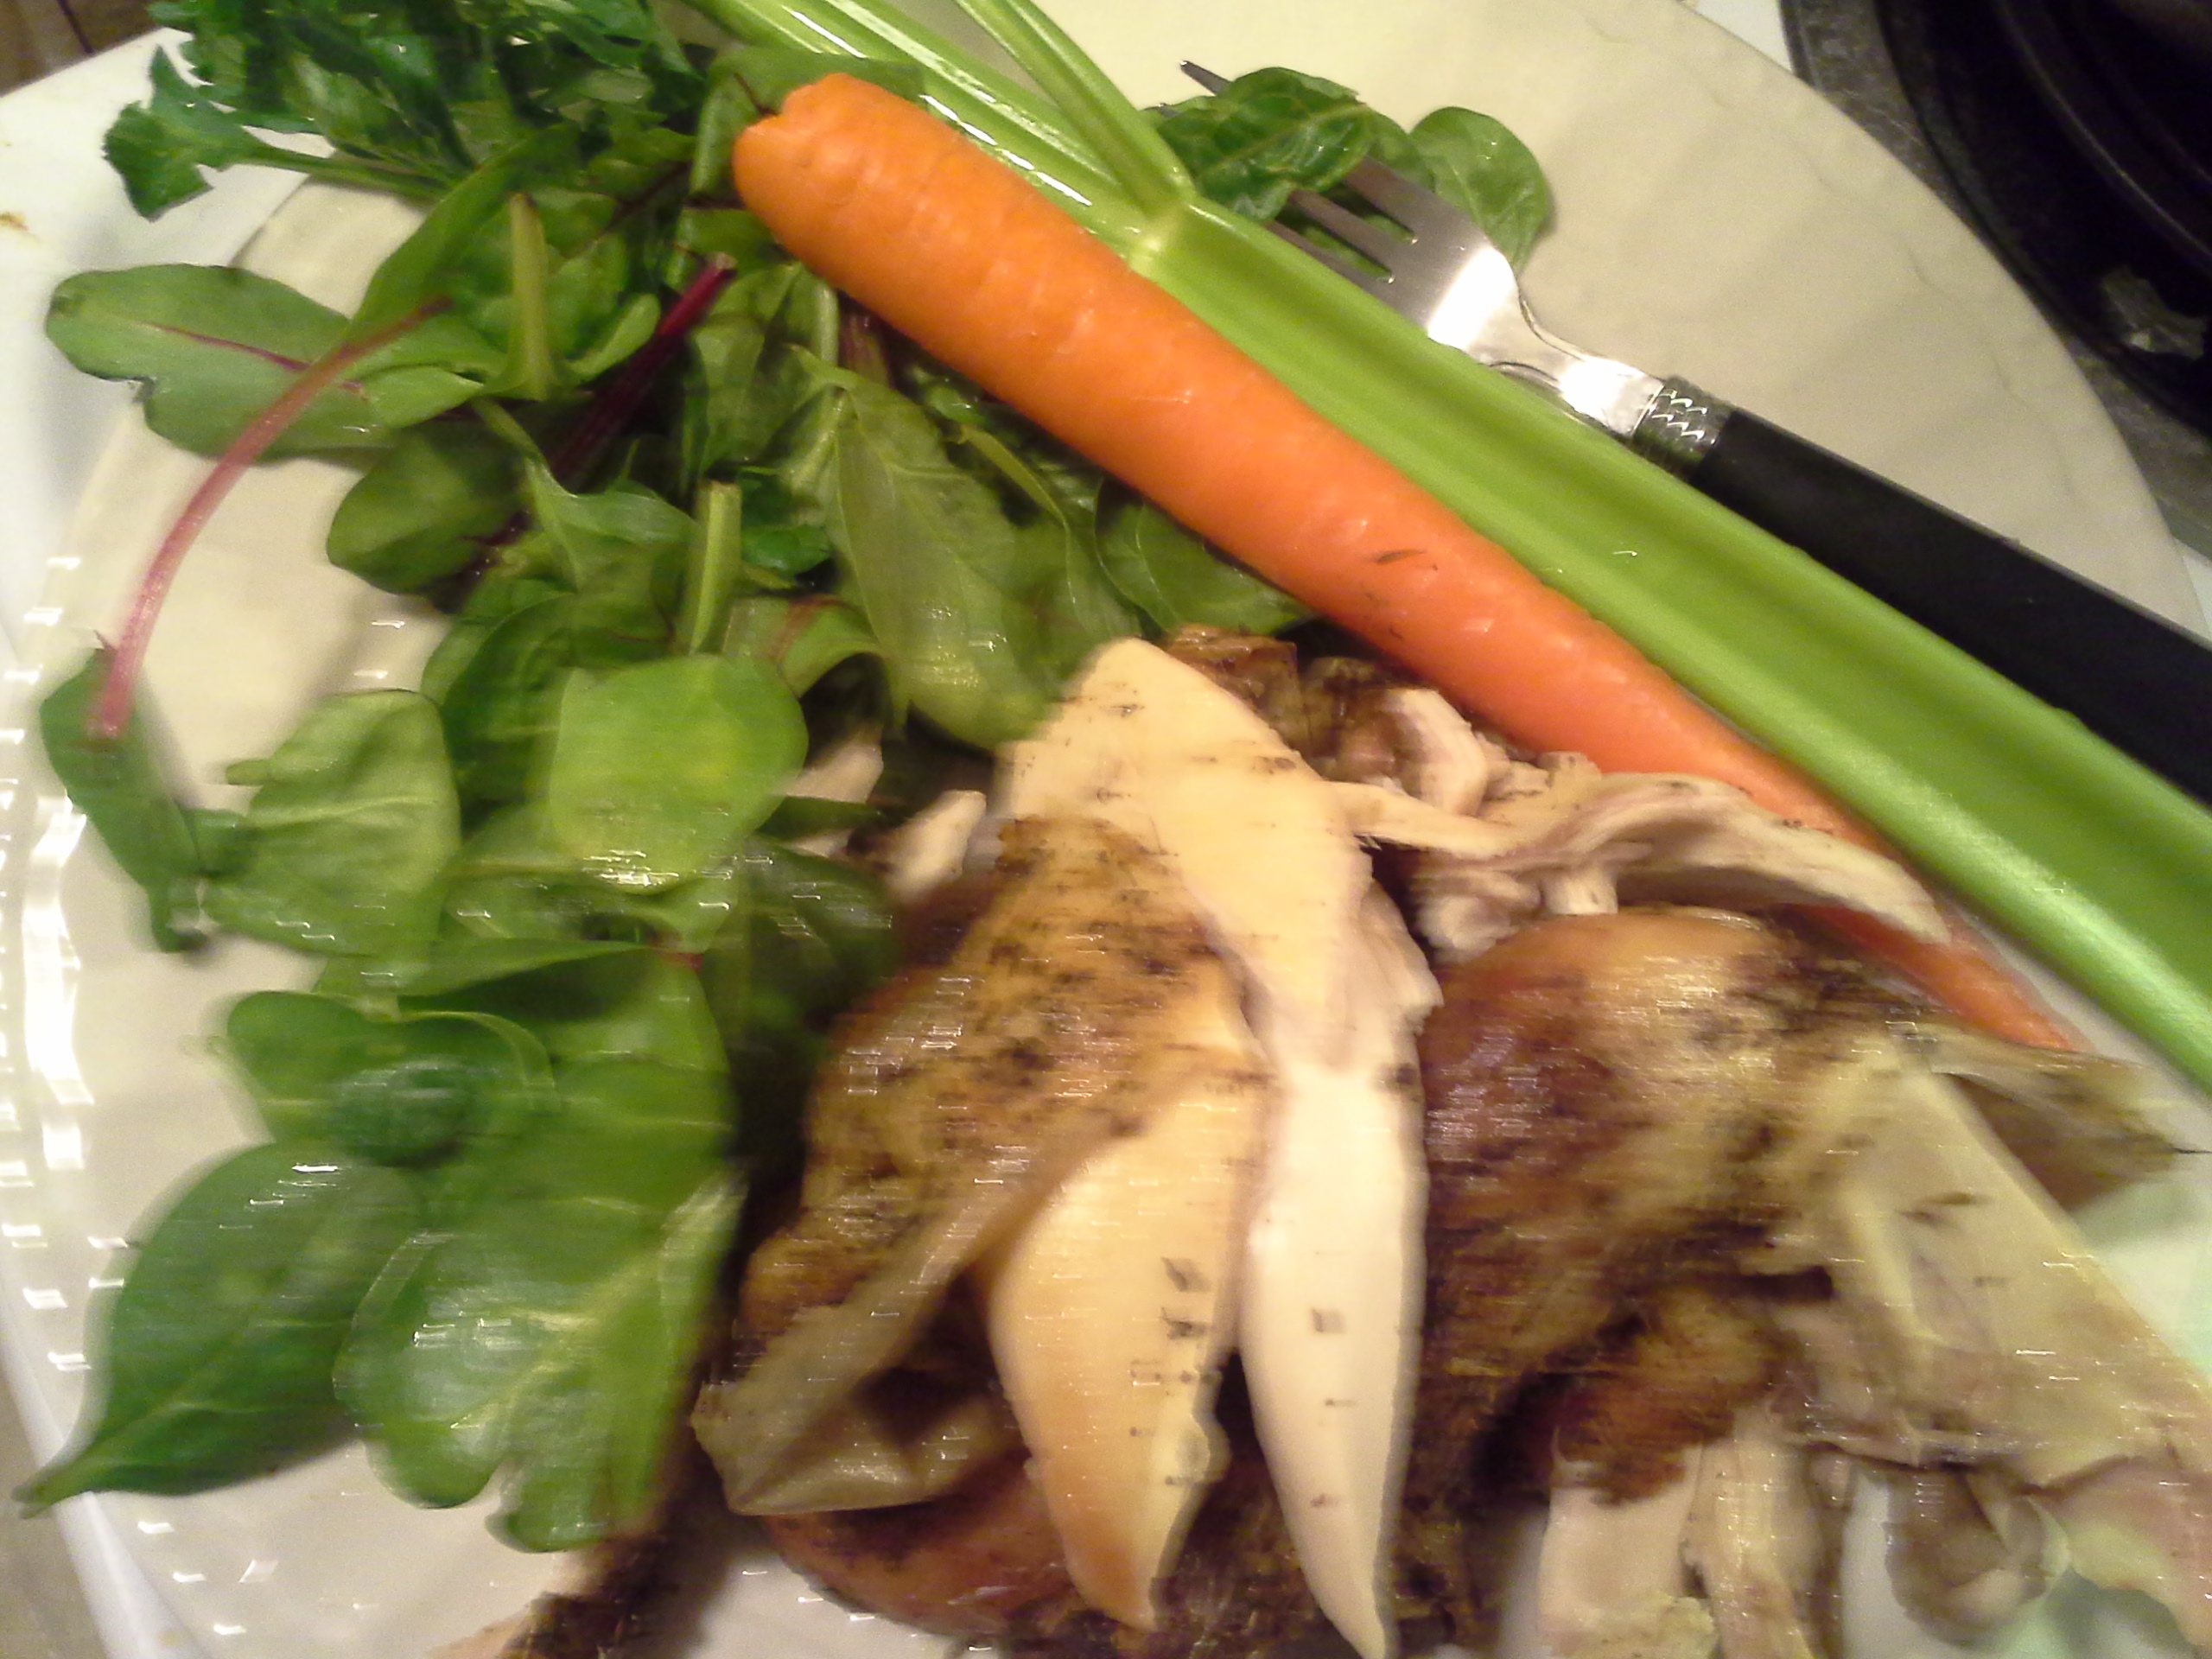 Dinner: 9:10 p.m. | Rotisserie chicken, 1.5 oz. baby kale/chard/spinach mix, 1 stalk celery, 1 carrot